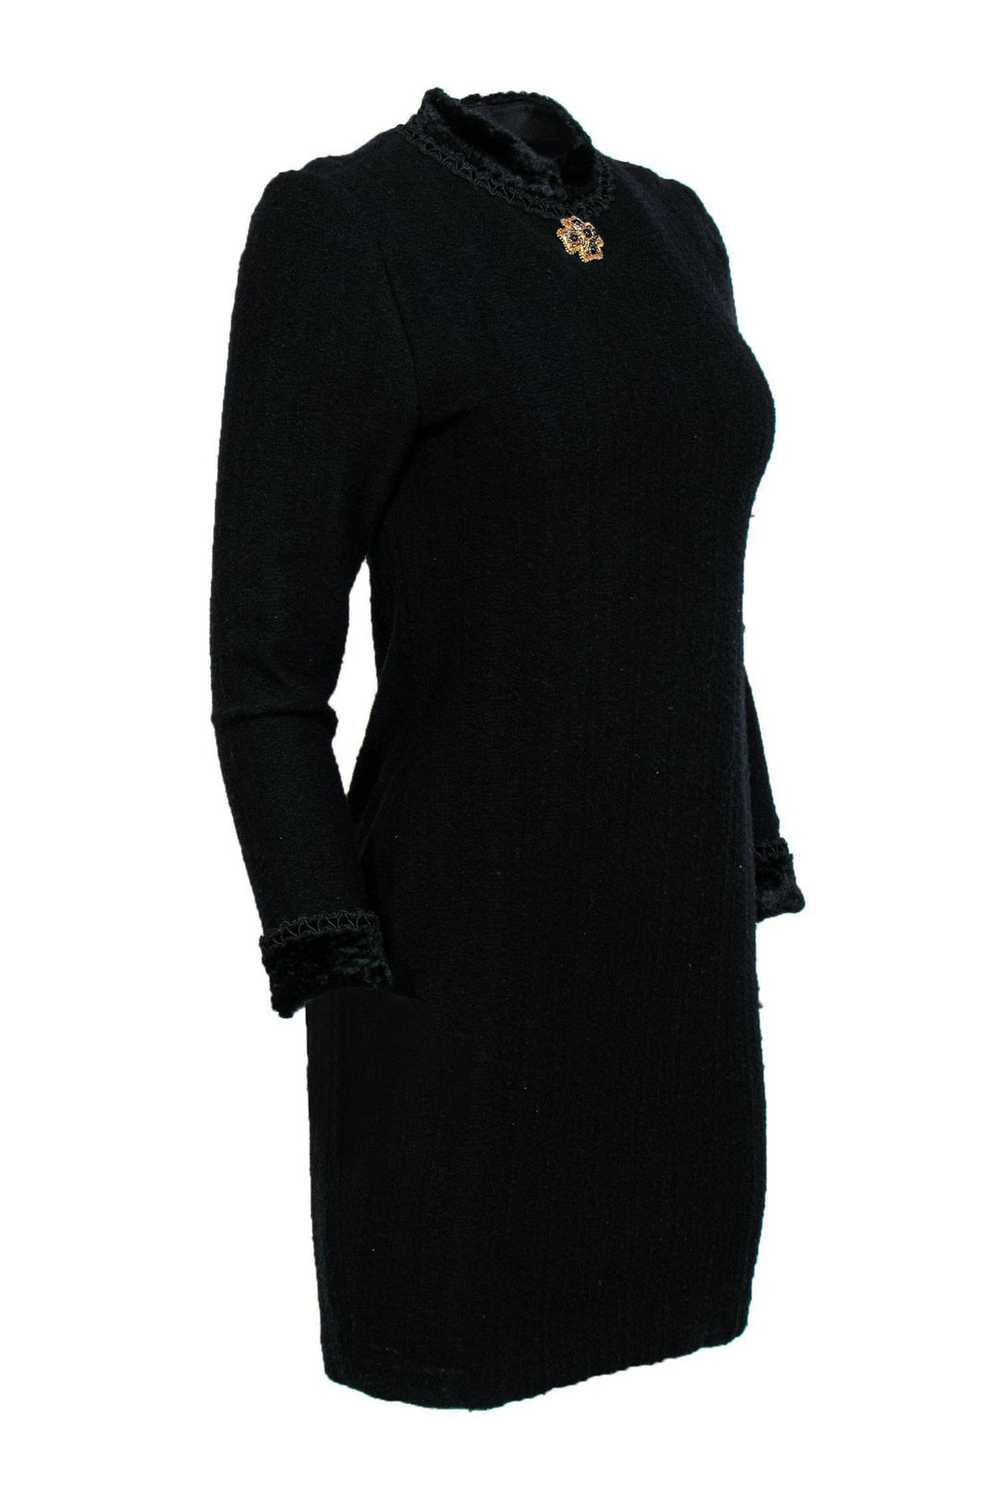 St. John - Black Vintage Wool Mock Neck Dress w/ … - image 2